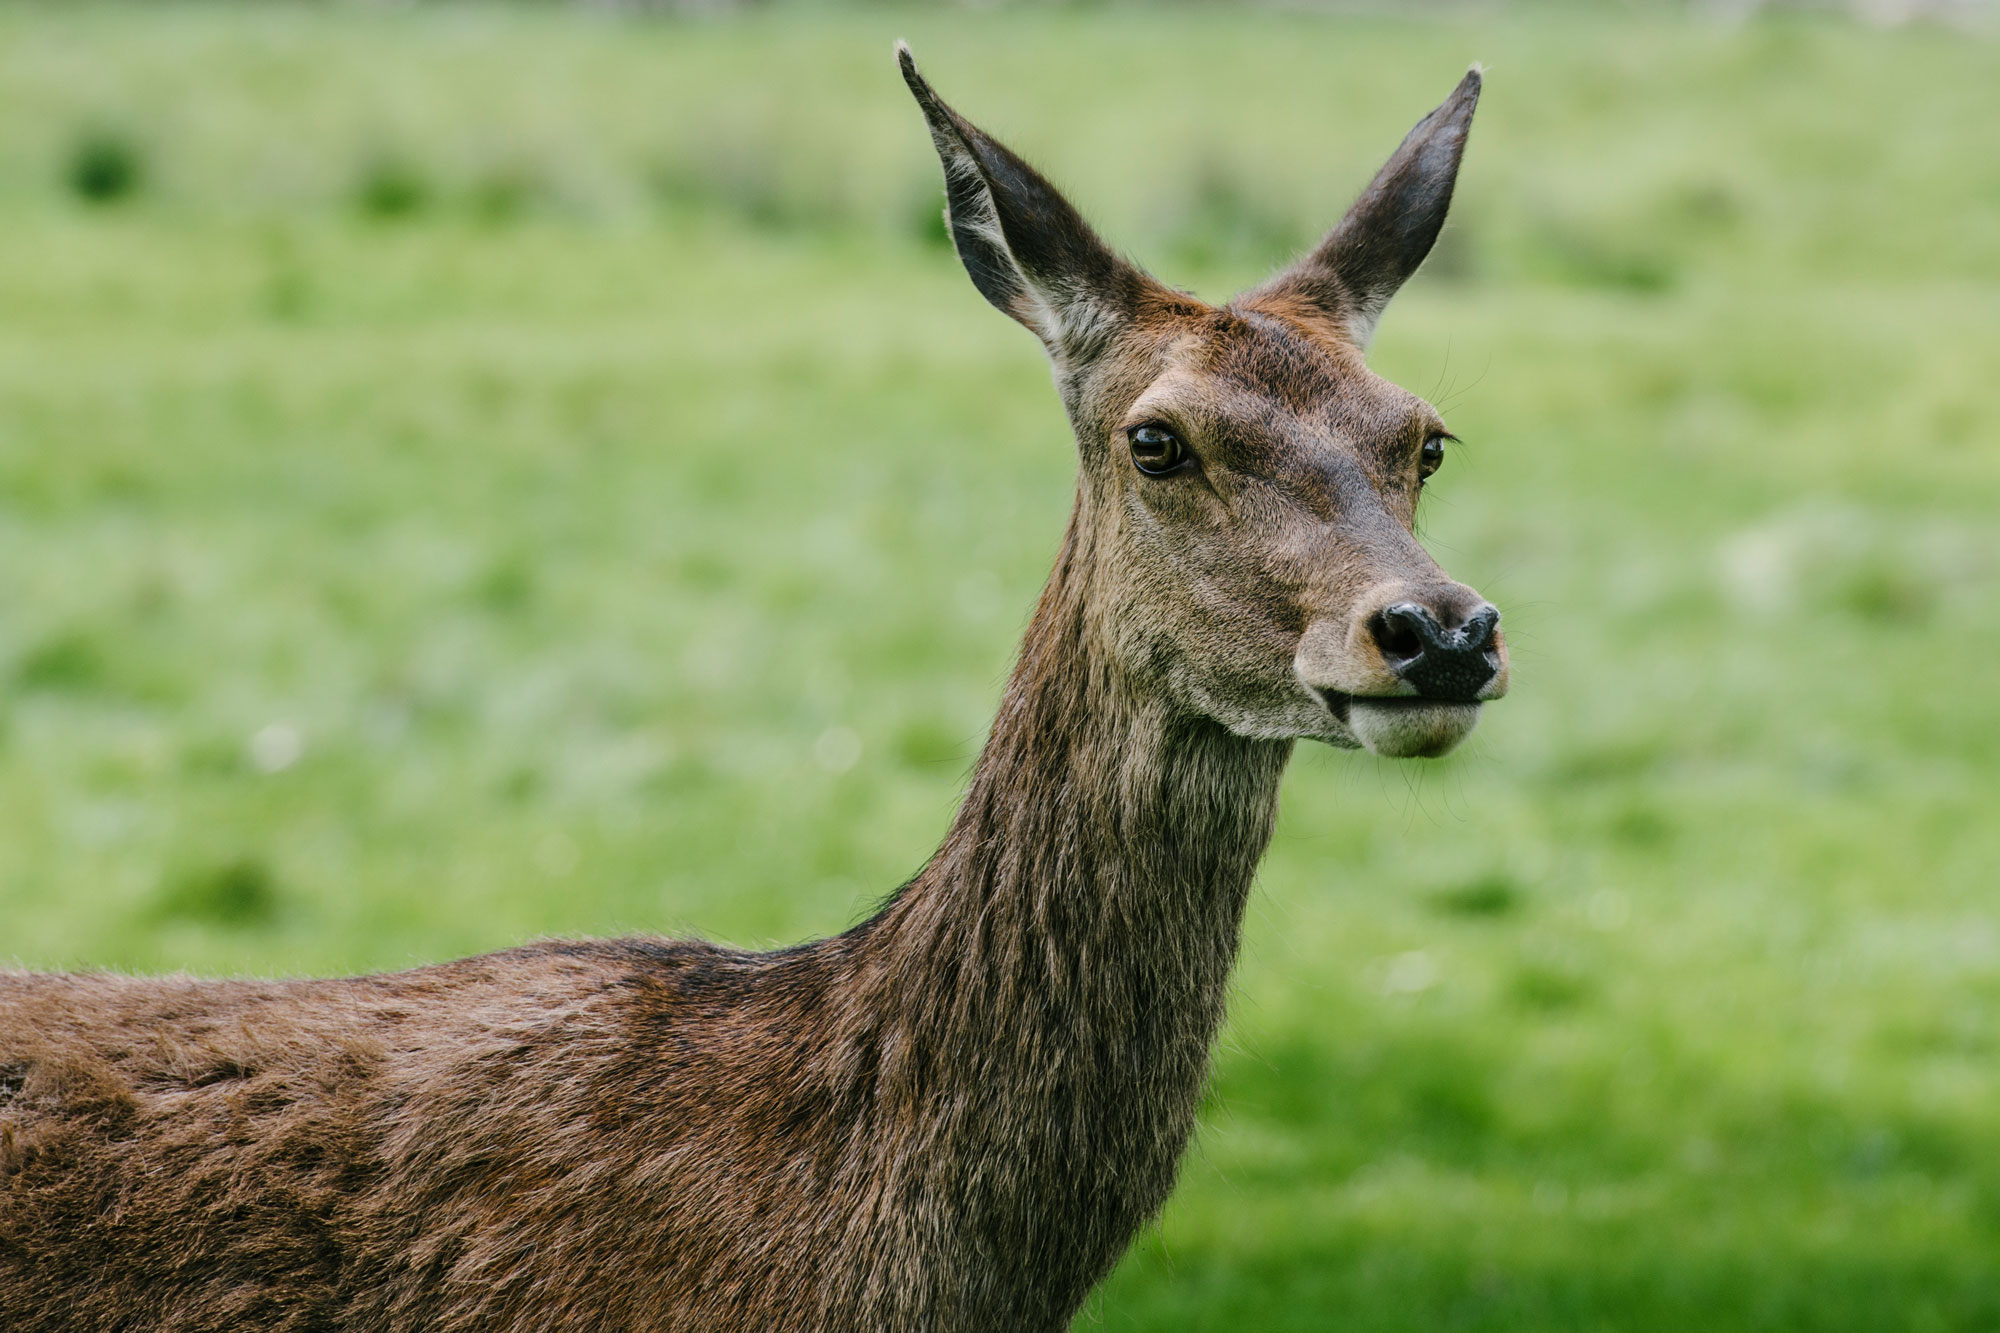 Deer-RichmondPark-Wildlife-AlbertoPiroddiPhotography